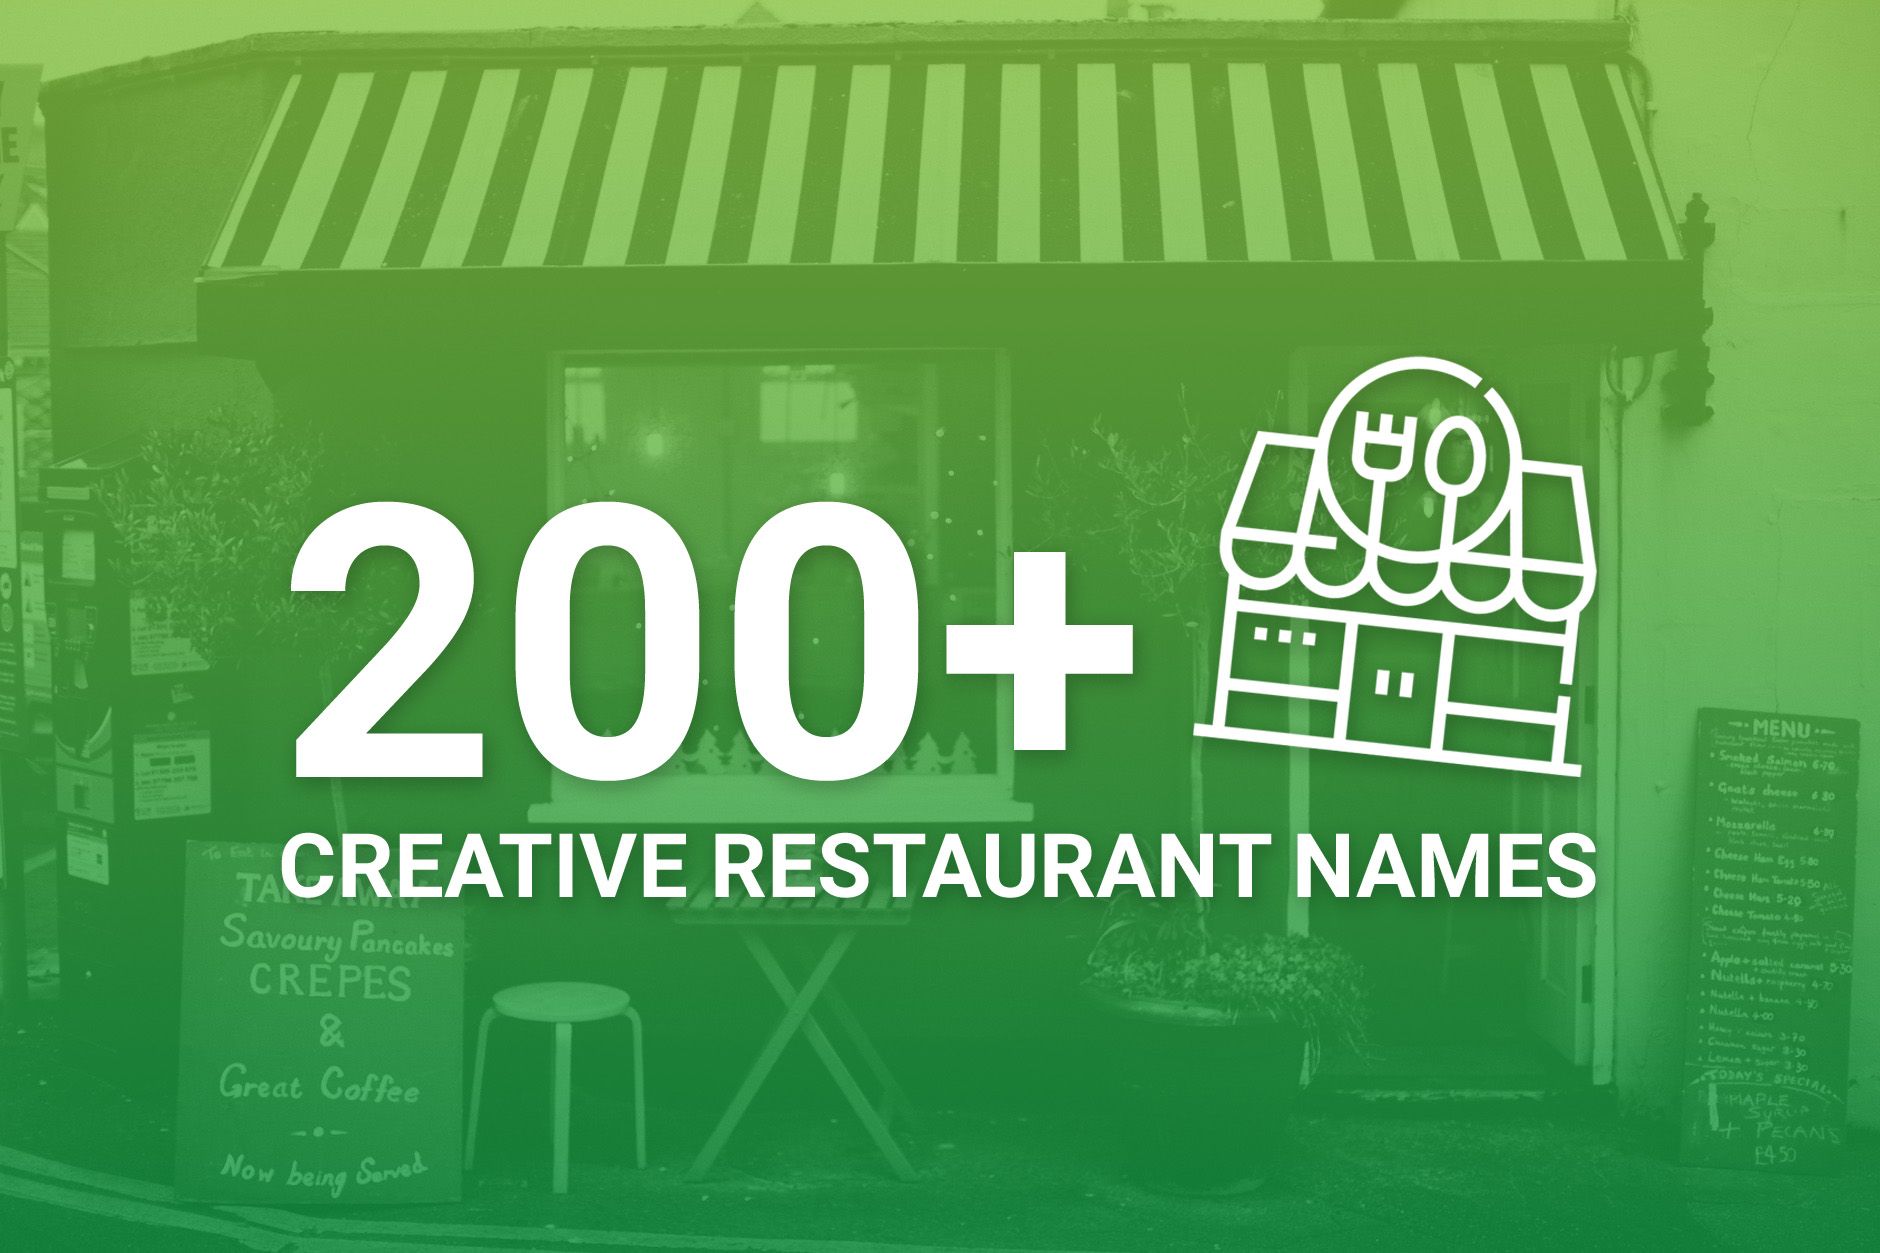 Creative Restaurant Names